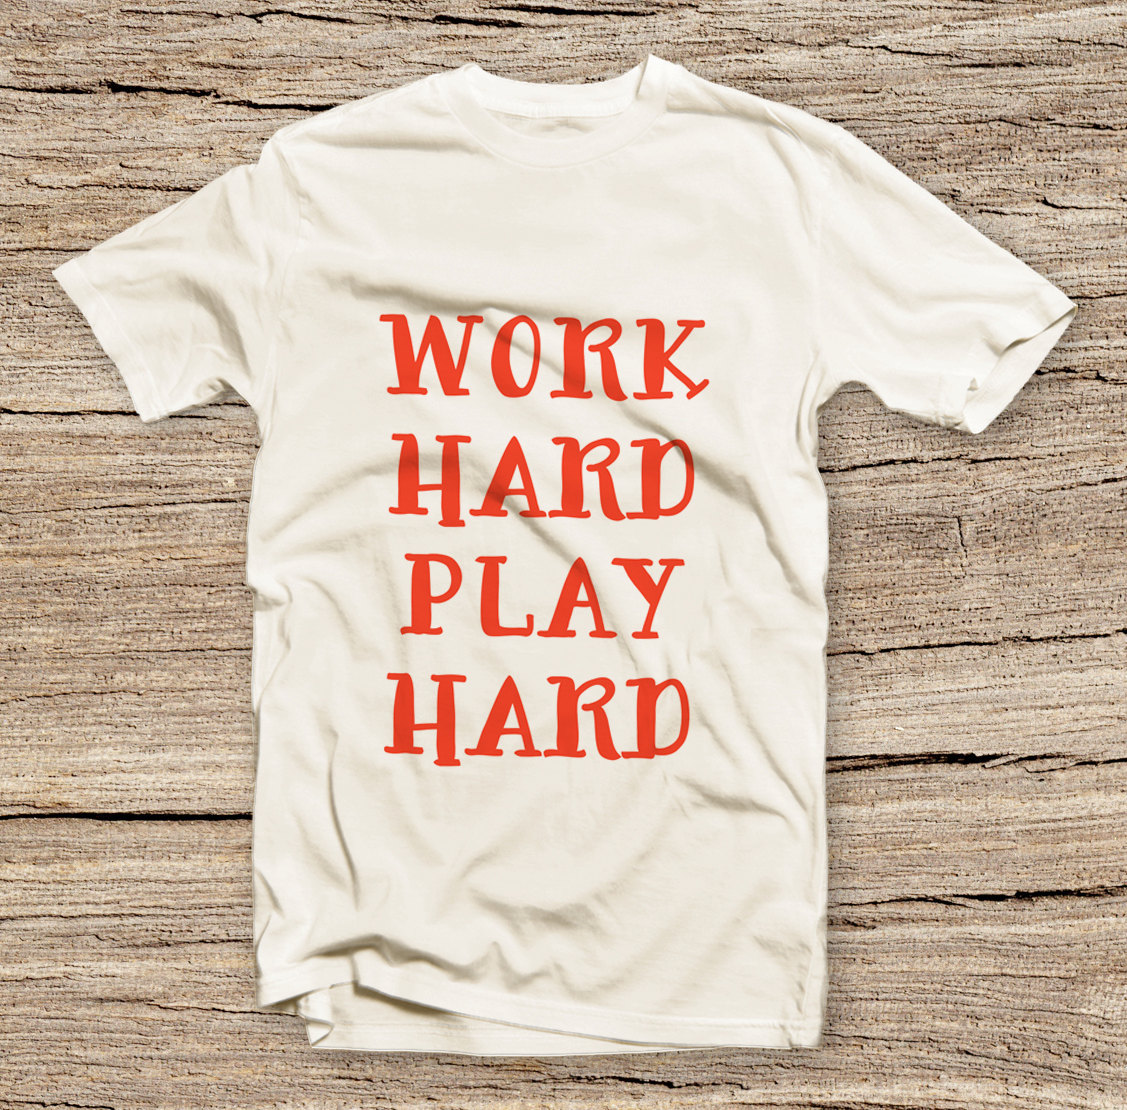 Pts-047 Work Hard Play Hard, Fashion Style Printed T-shirt